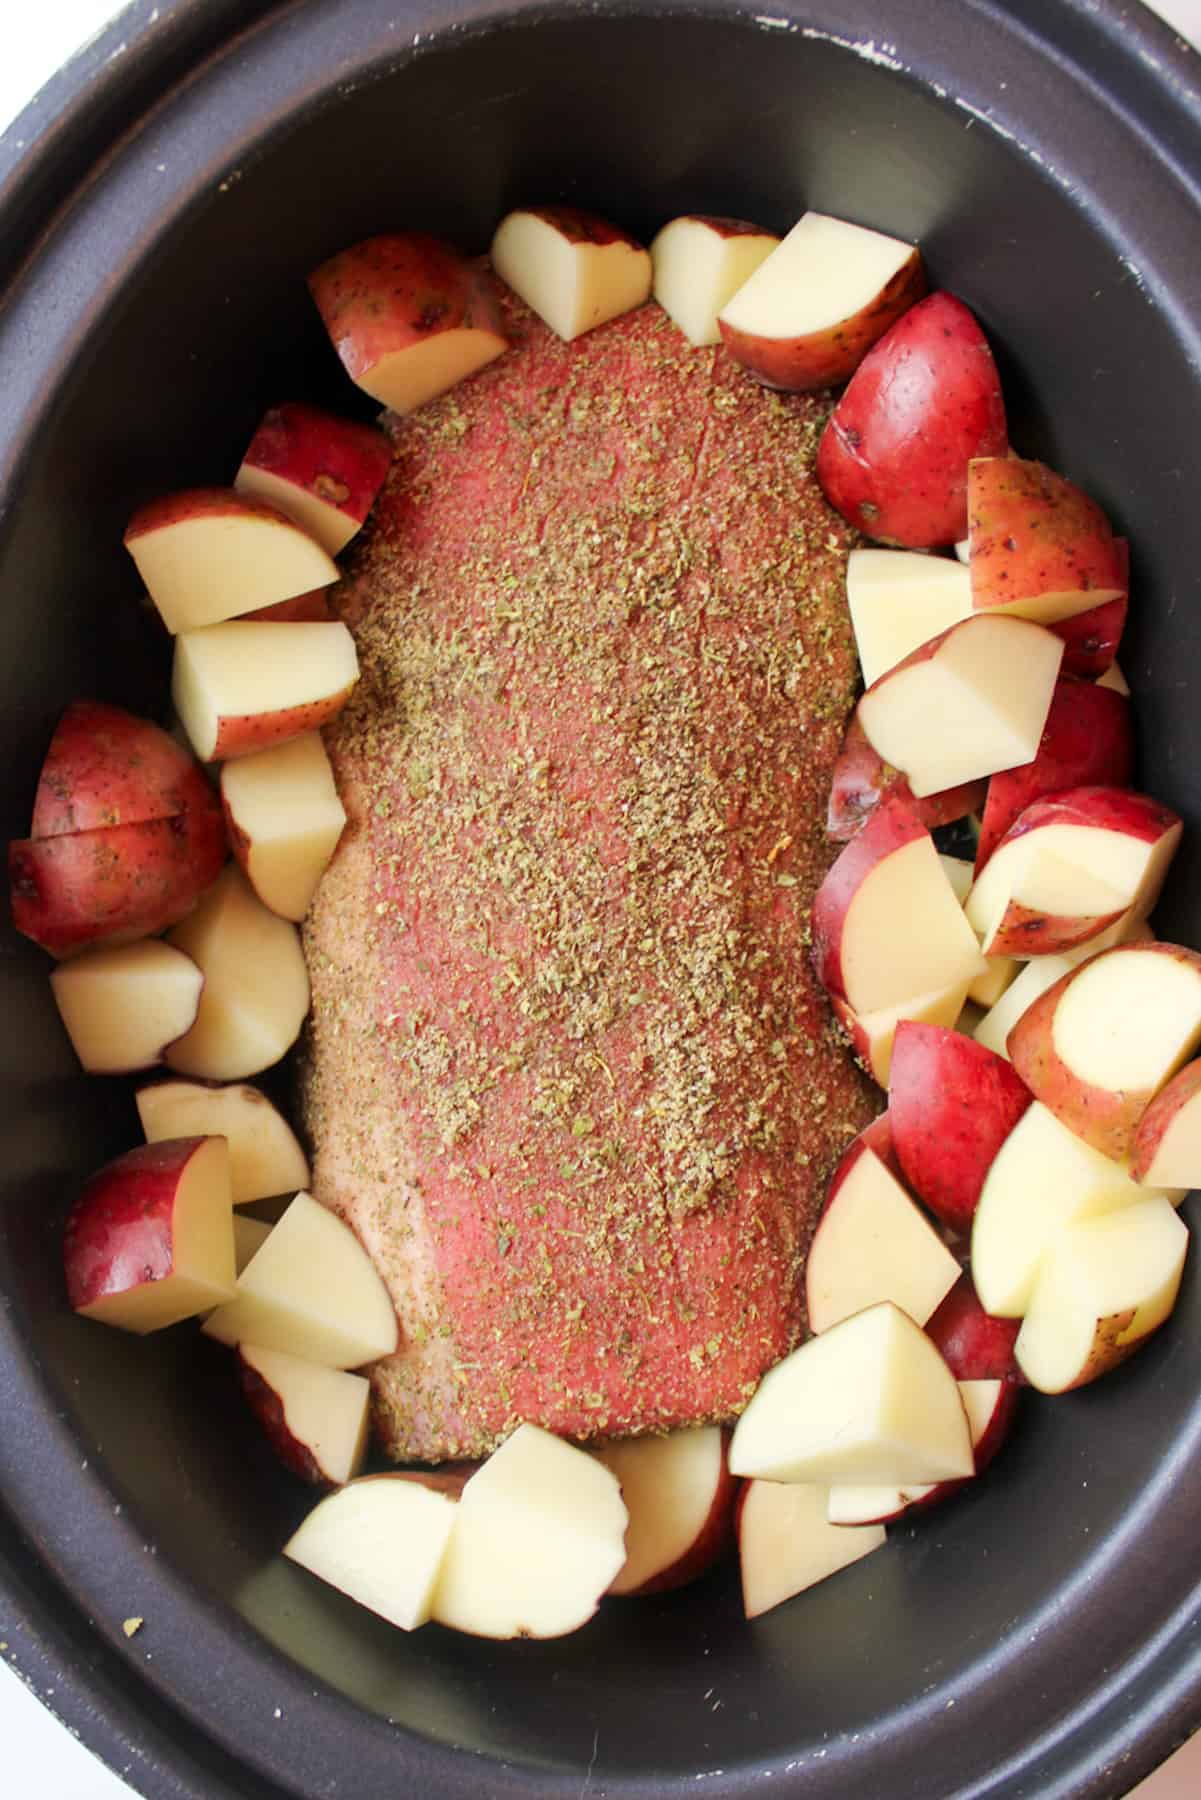 chopped red potatoes and seasoned beef roast in crock pot